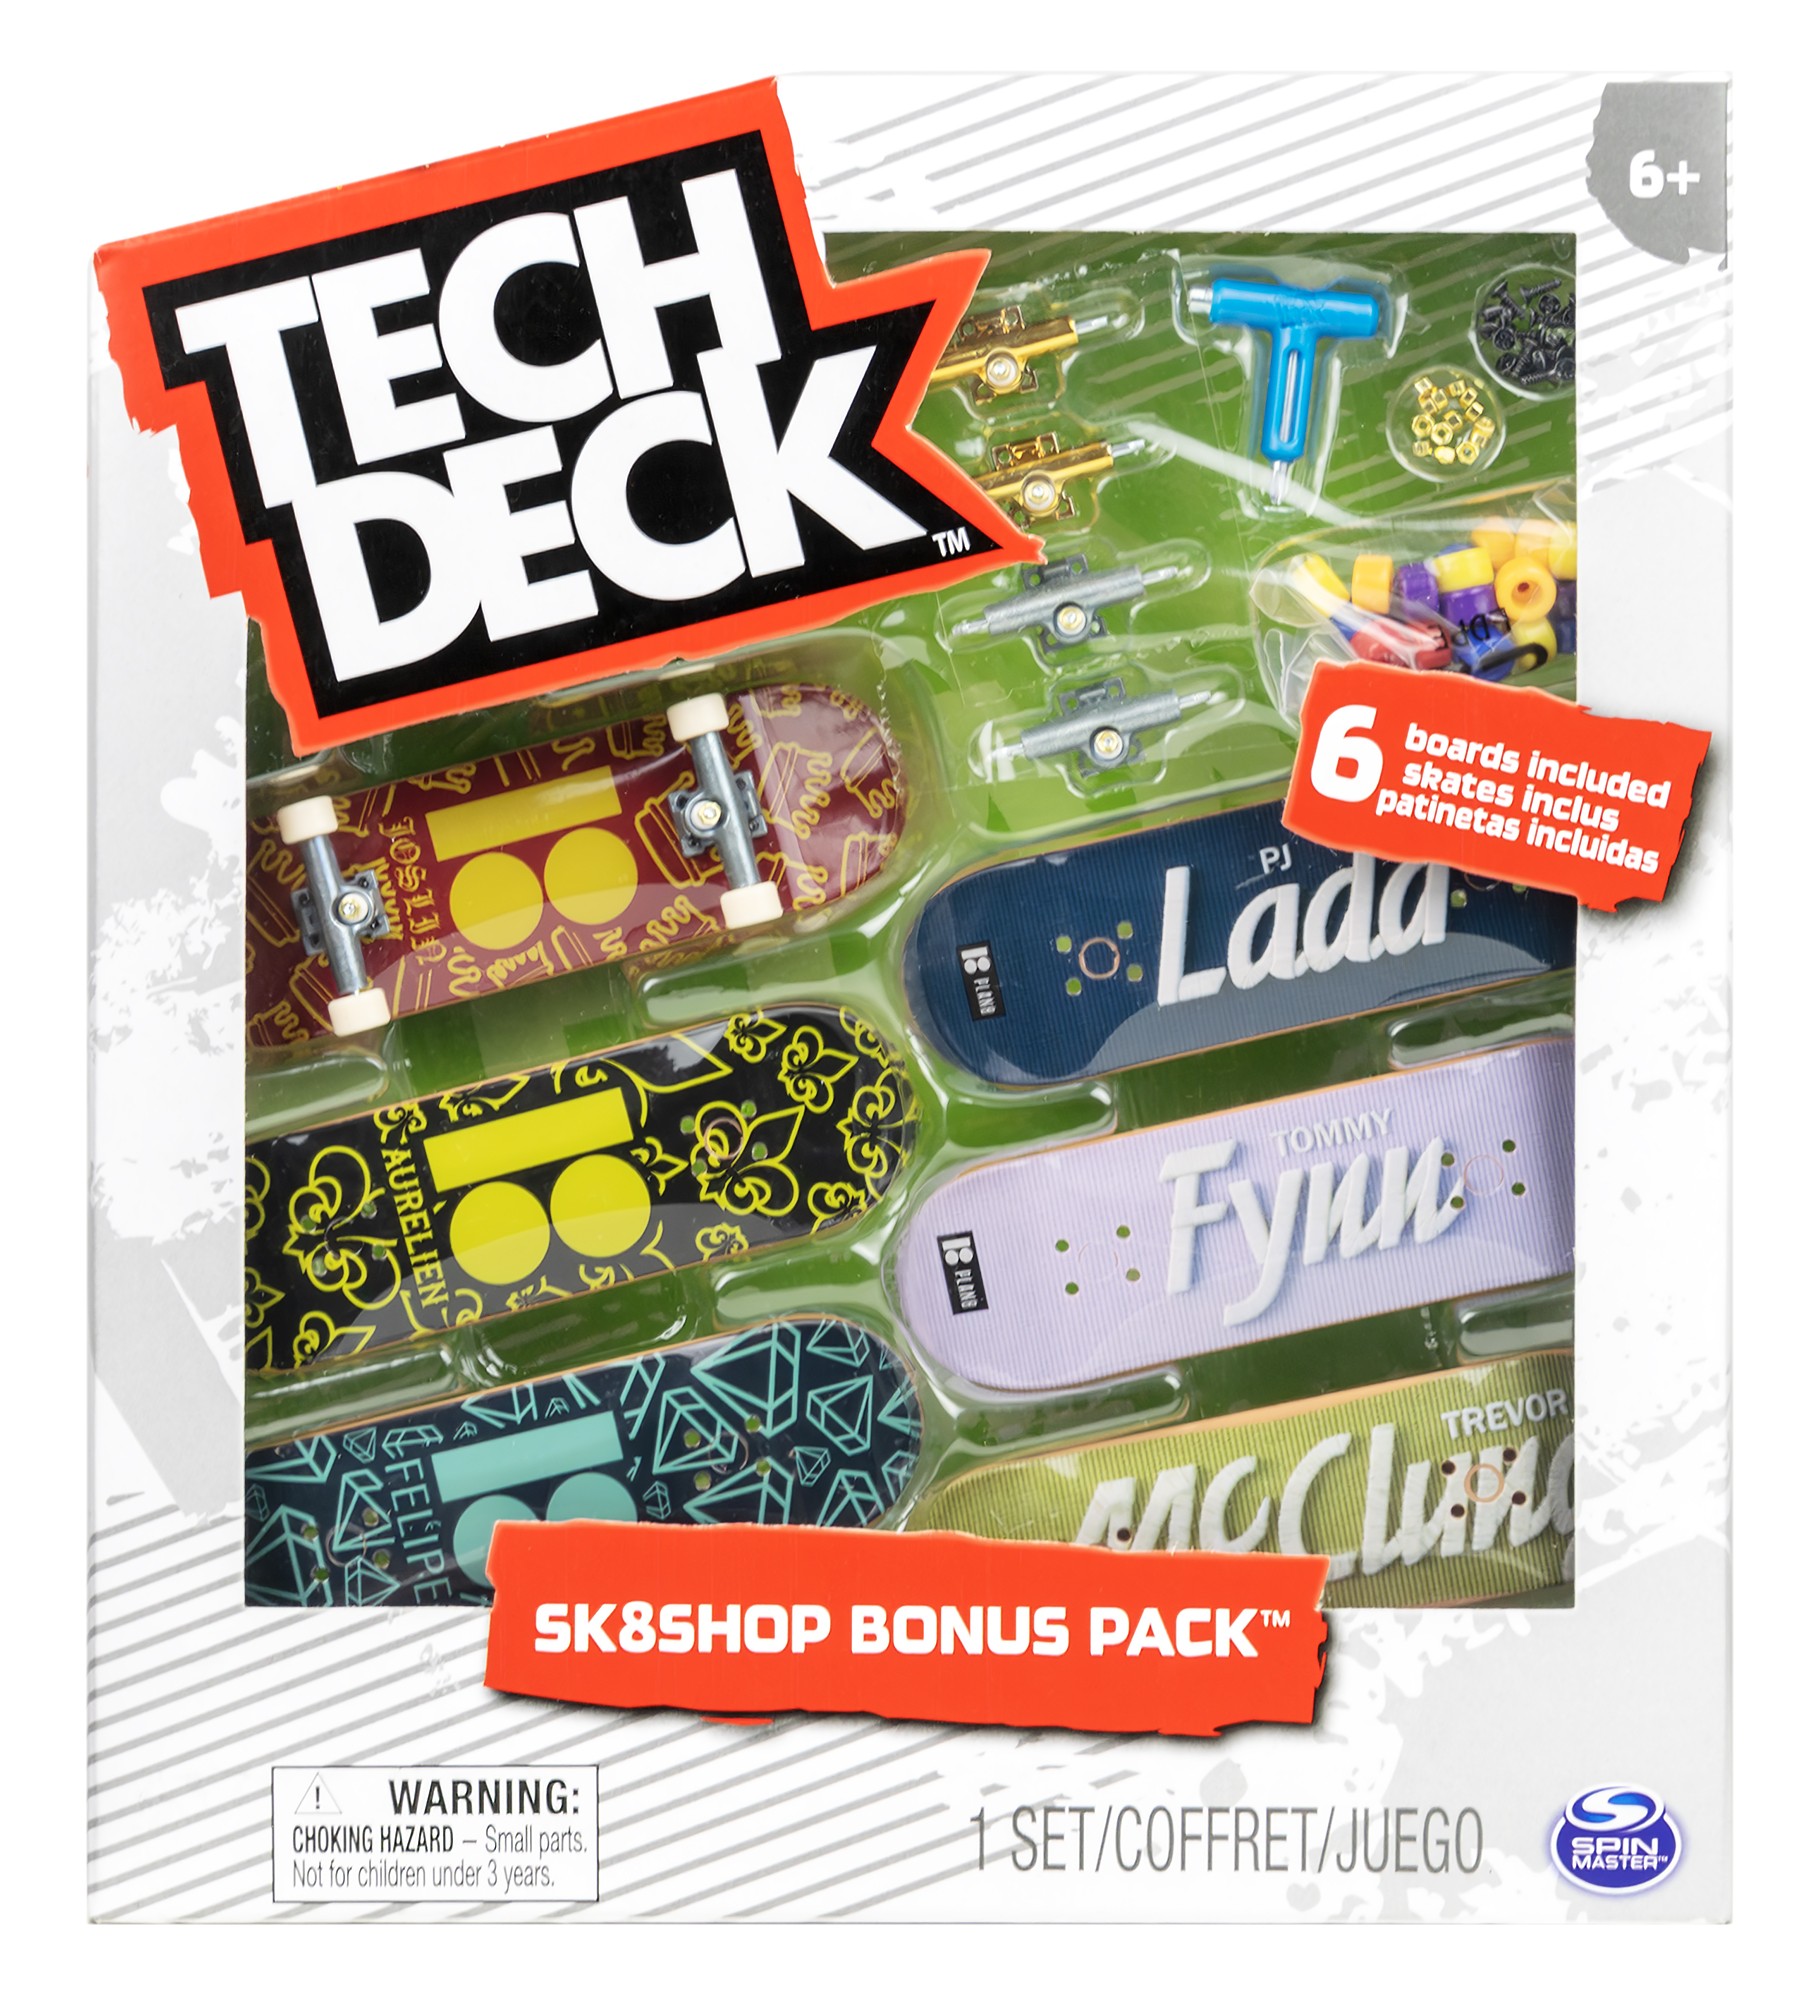 Tech Deck zestaw Sk8Shop 6 deskorolek Bonus Pack PlanB + akcesoria